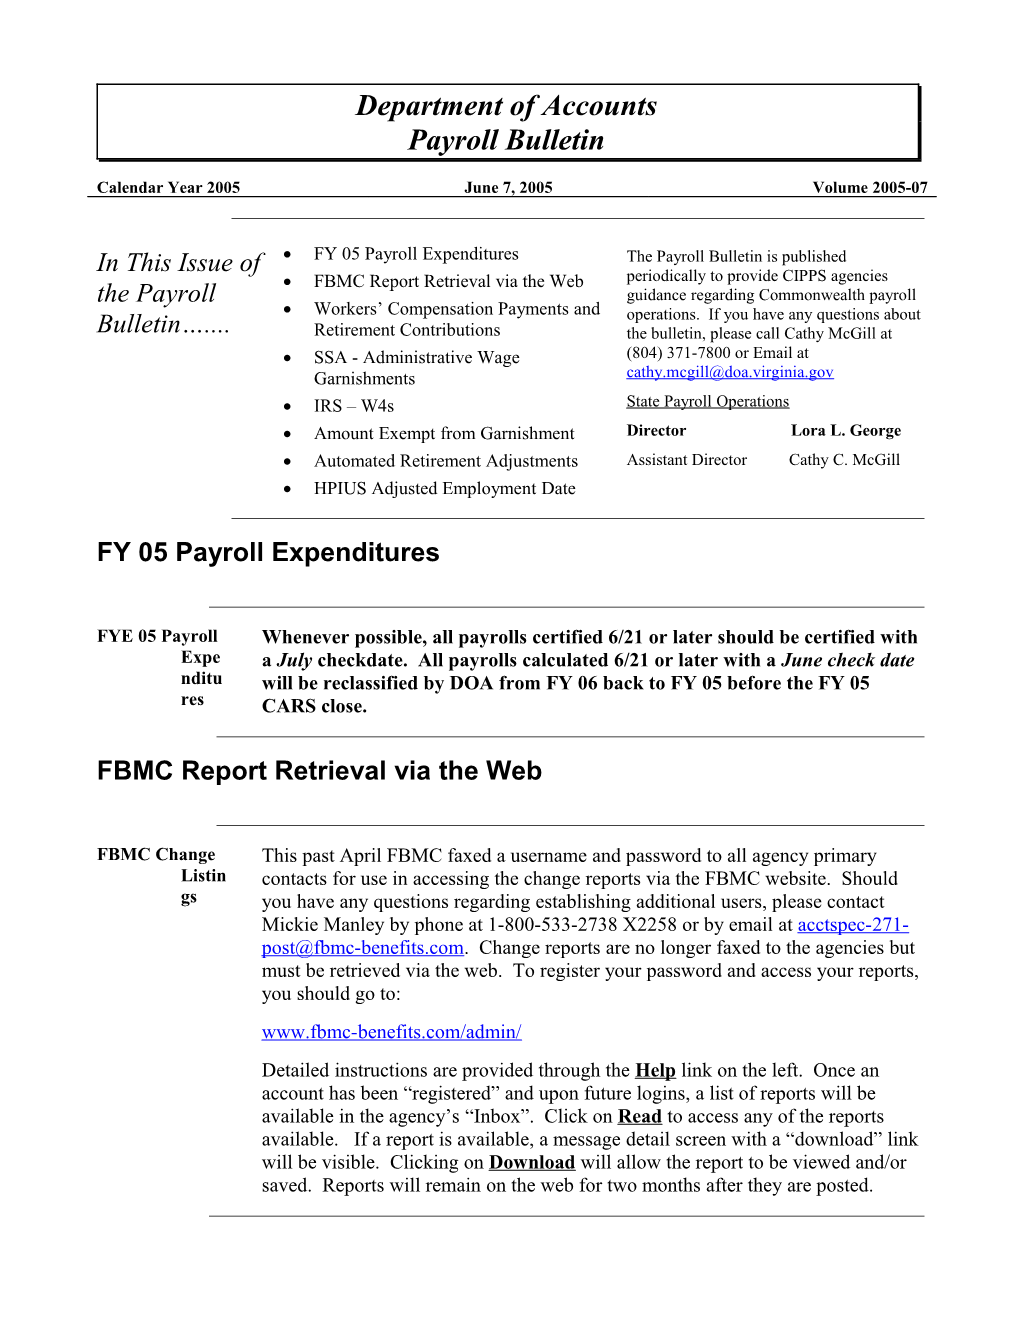 Payroll Bulletin, Volume 2005-07